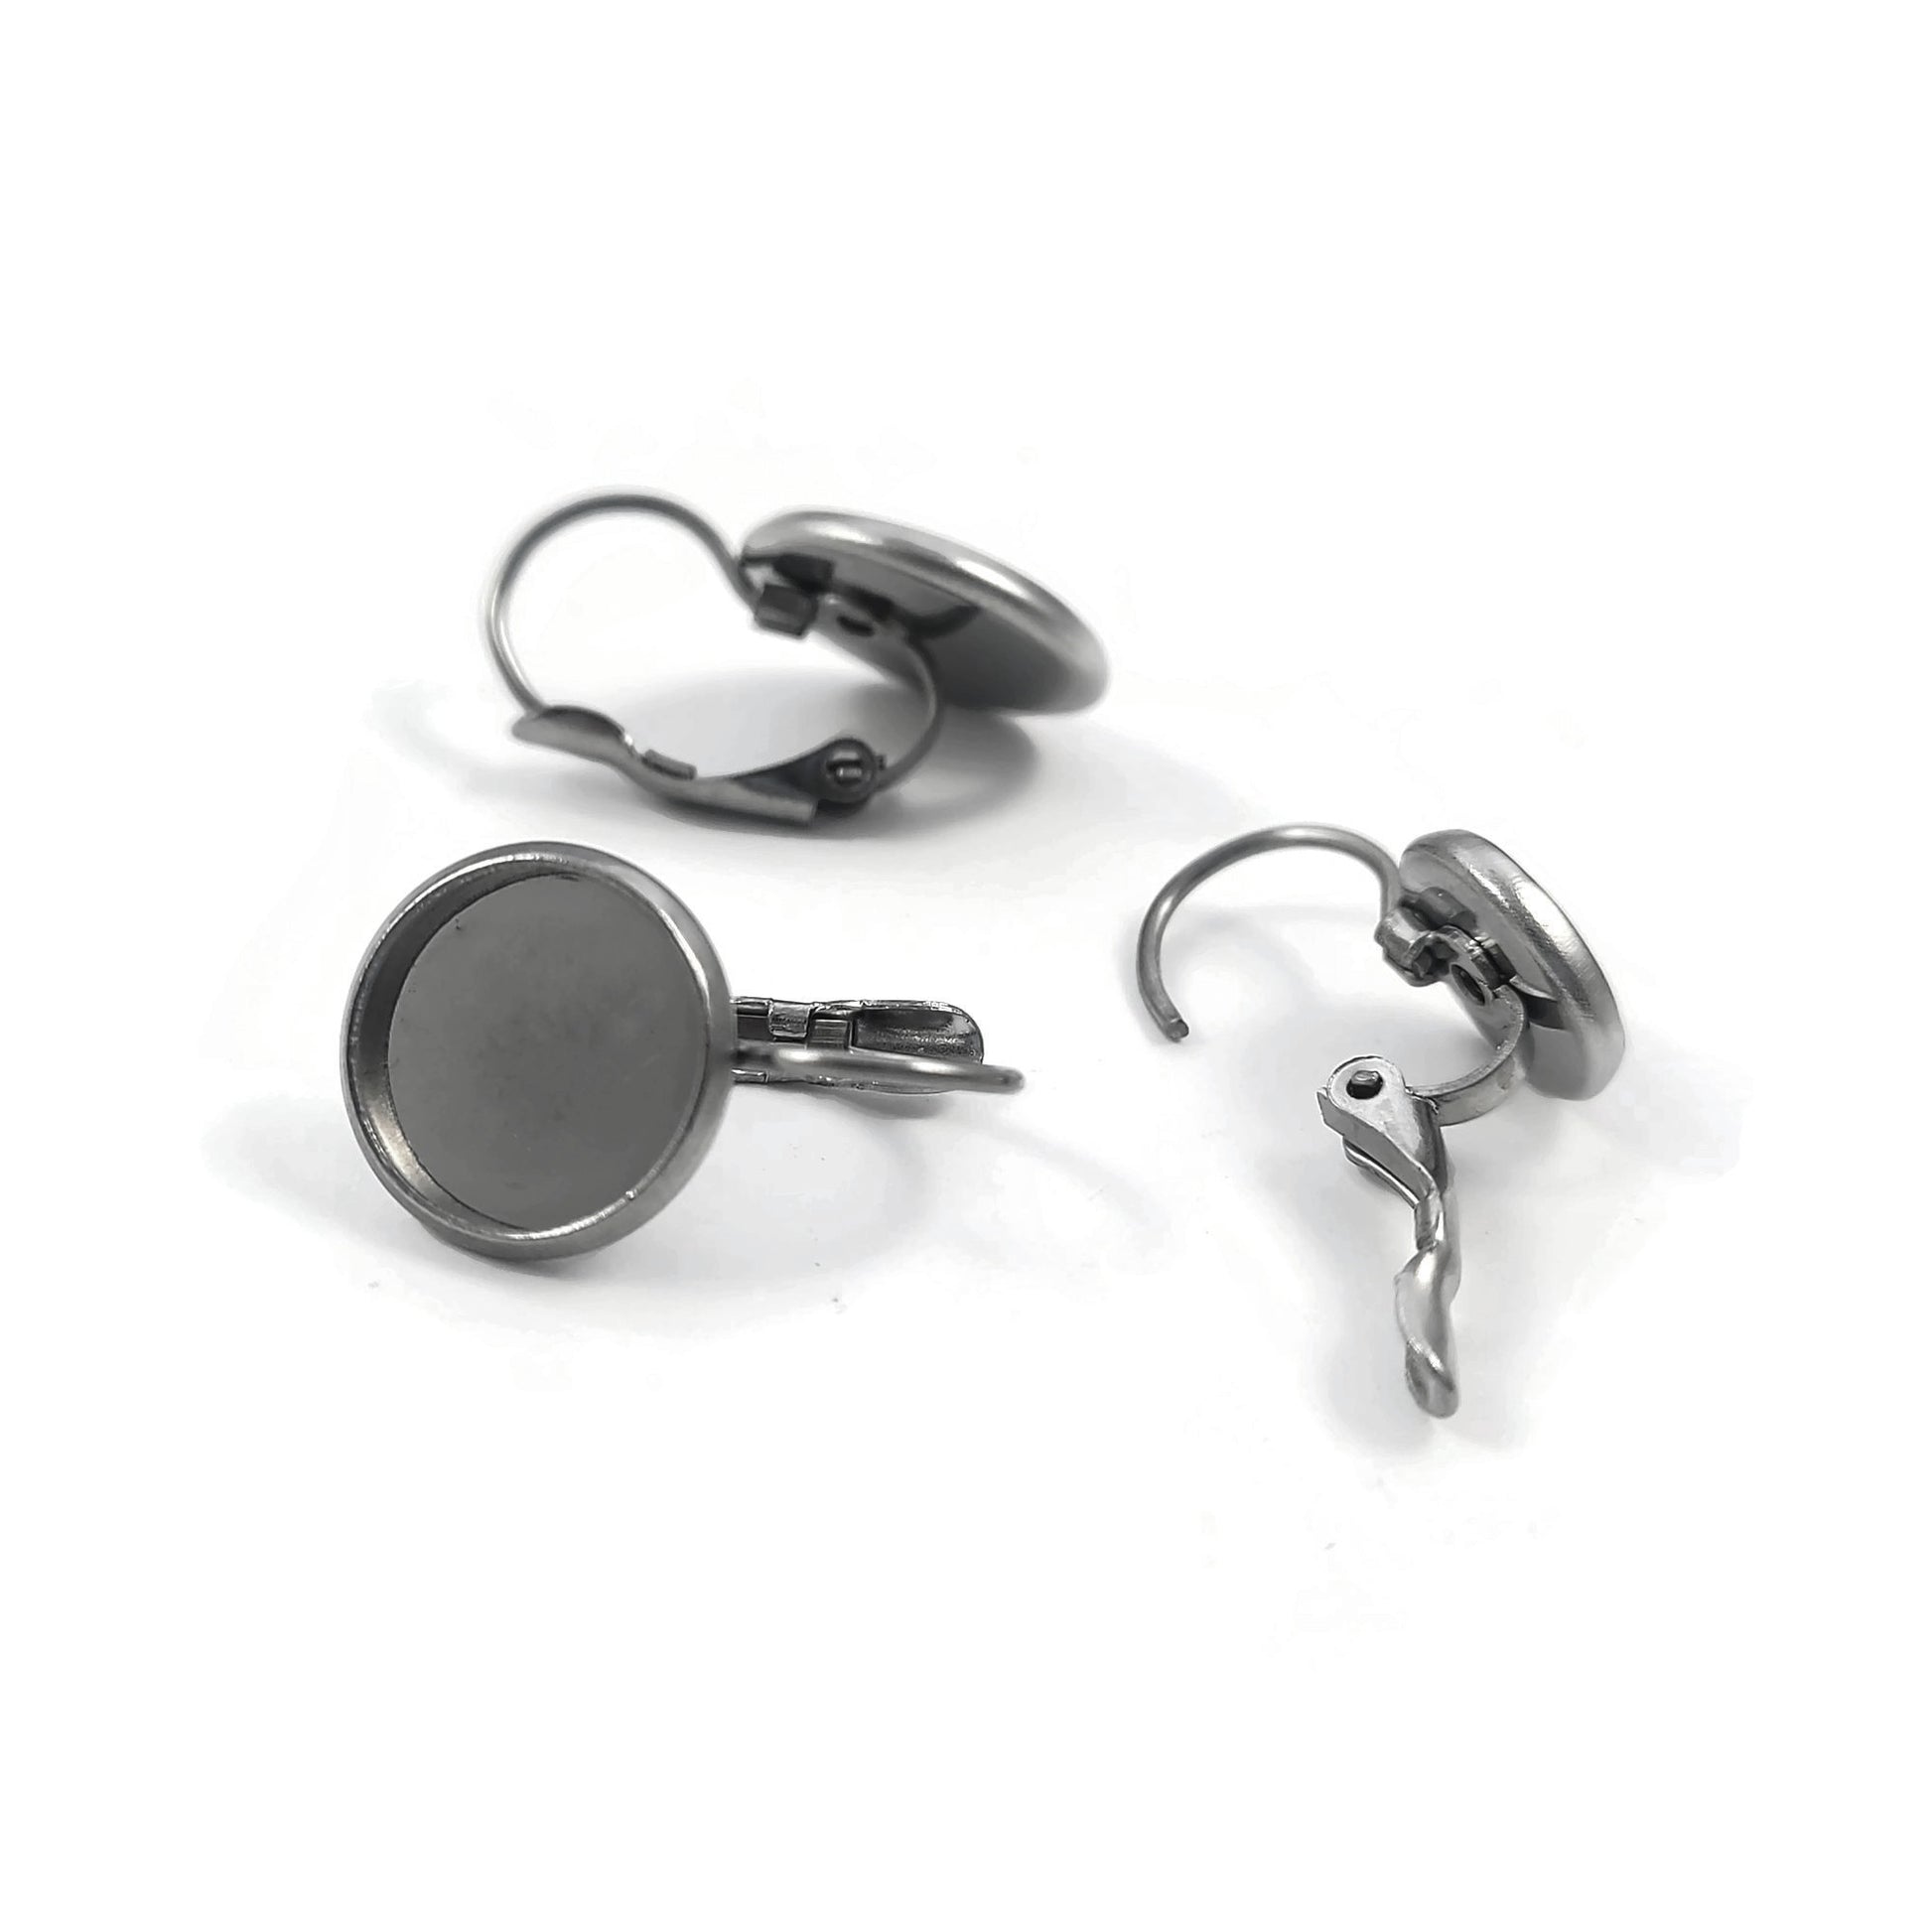 Stainless earring setting lever back, 8mm, 10mm, 12mm